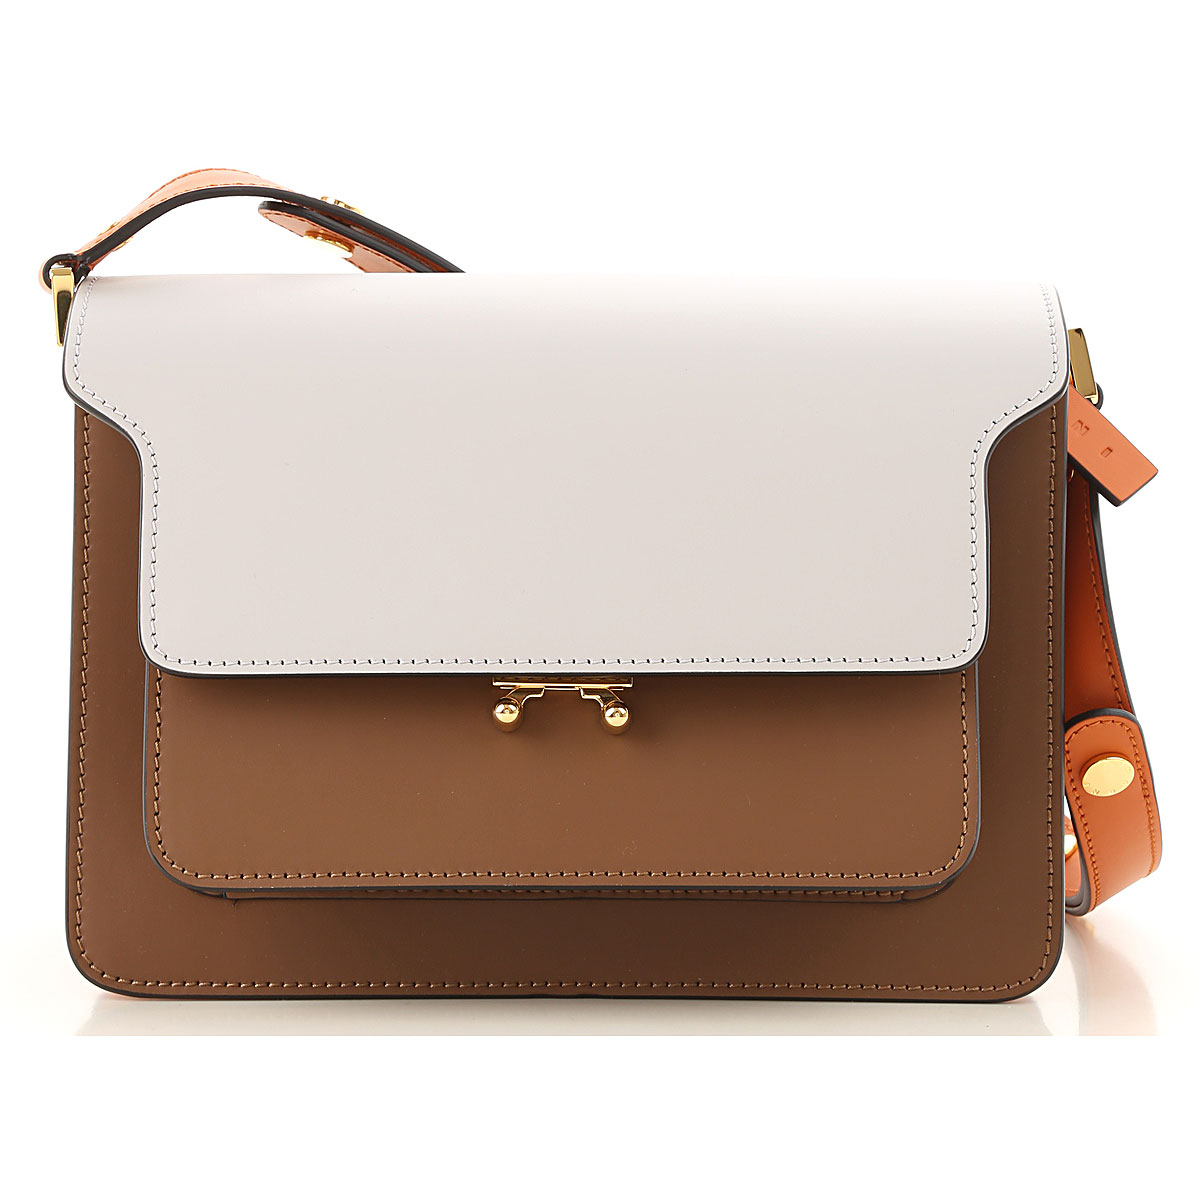 Handbags Marni, Style code: sbmpn09n03-lv583-z108n